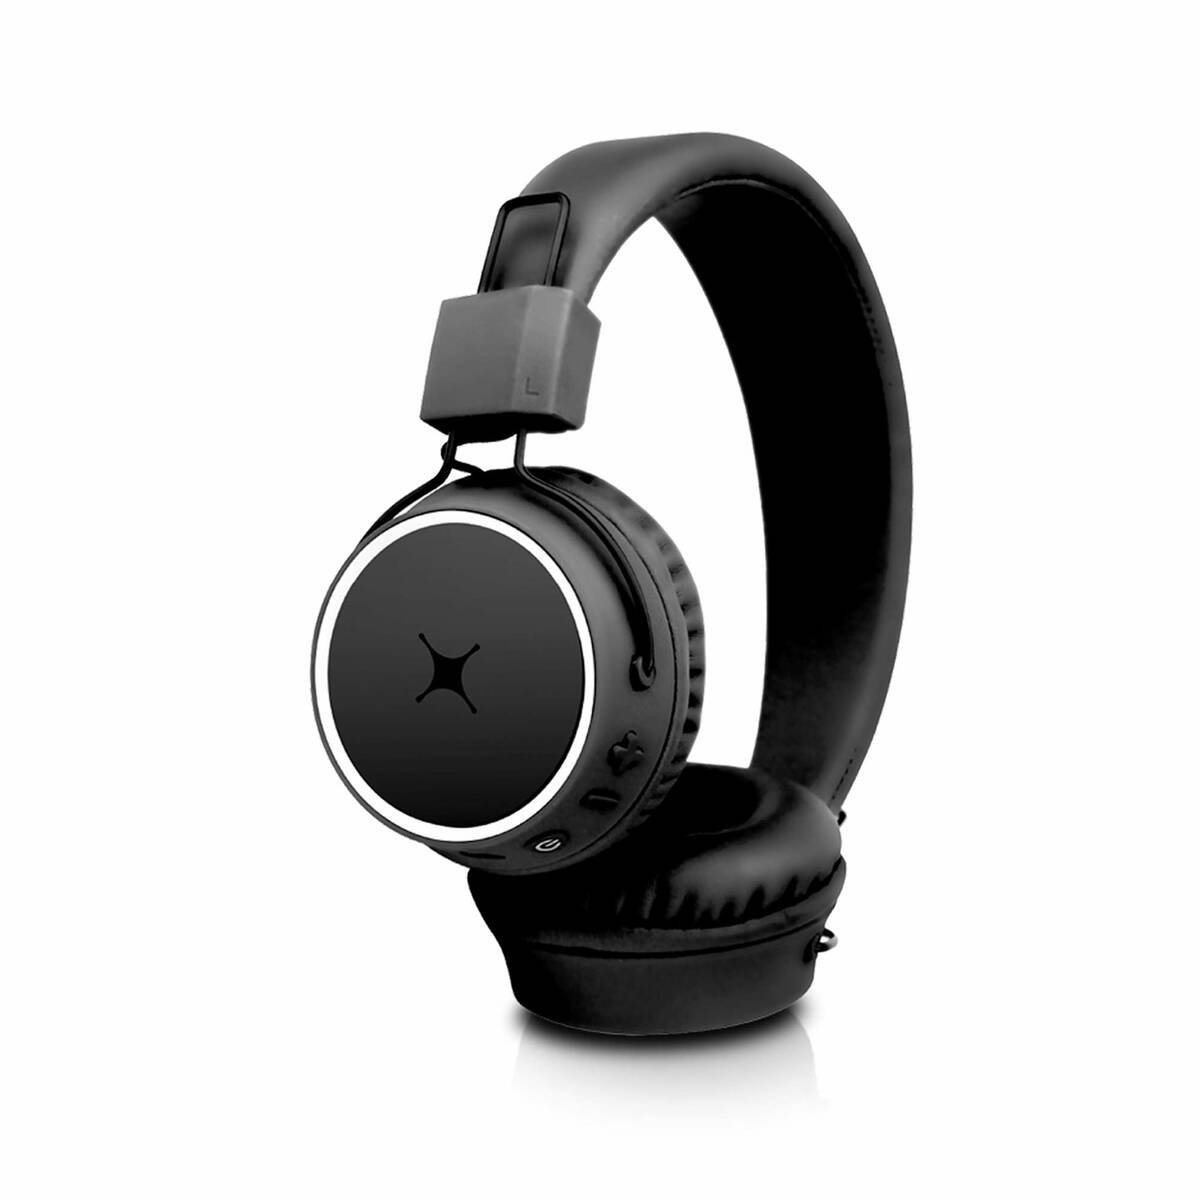 Xplore On-Ear Wireless Headphone with Microphone XP-3 Black